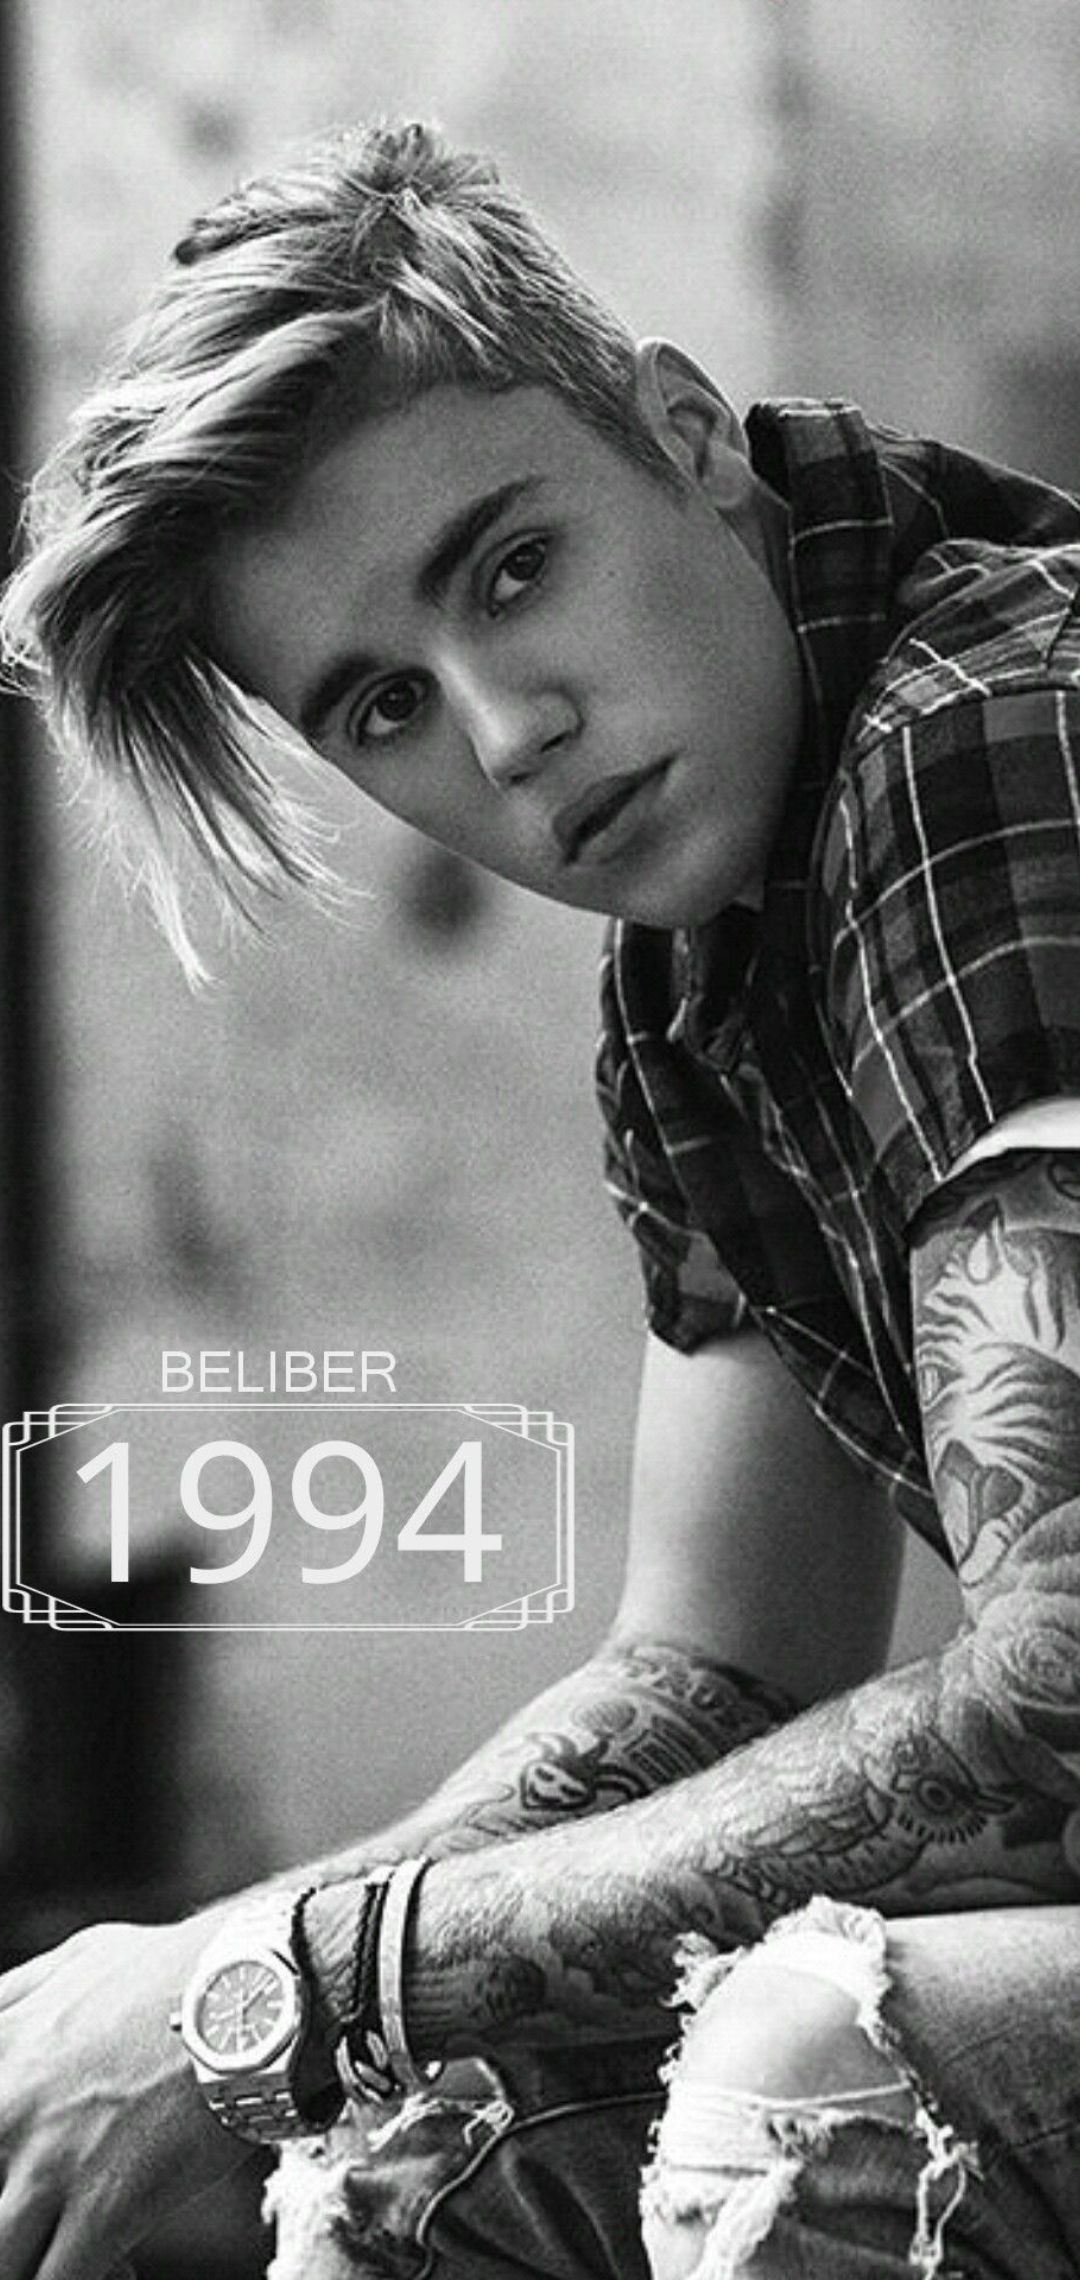 Justin Bieber Home Screen Wallpapers